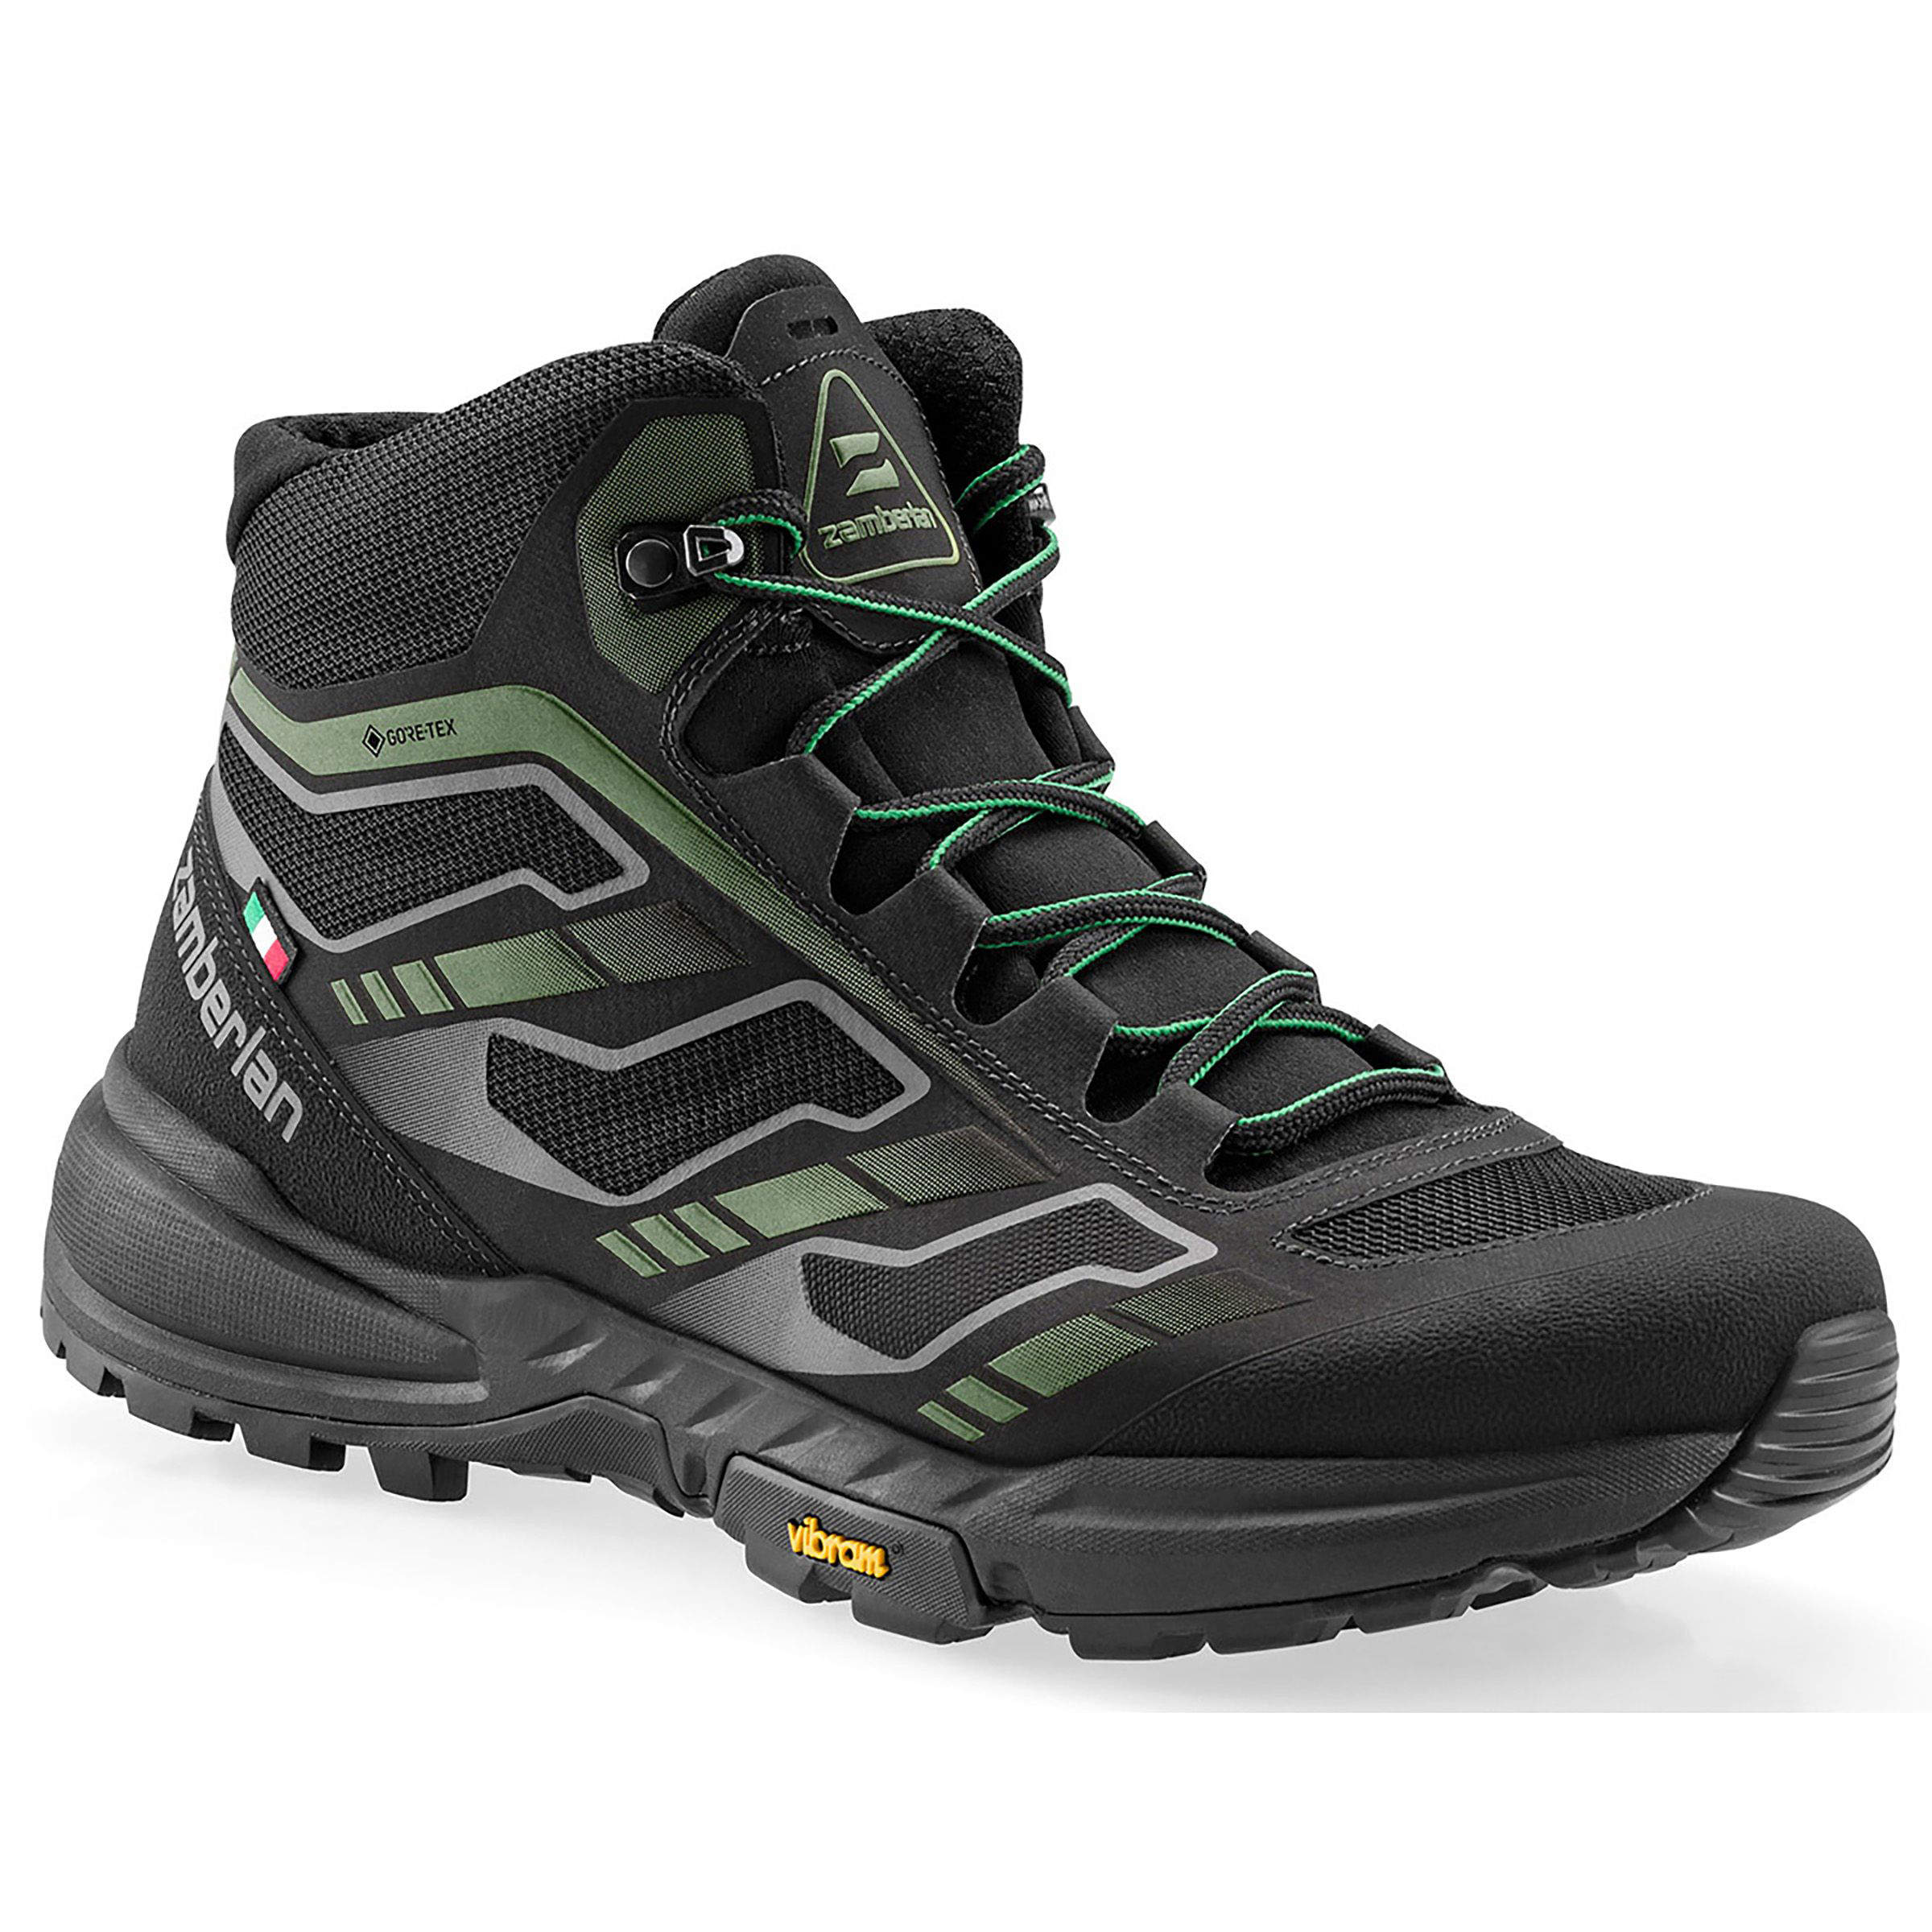 Zamberlan 219 Anabasis GTX Waterproof Mid Hiking Boots for Men - Dark Green - 10.5M